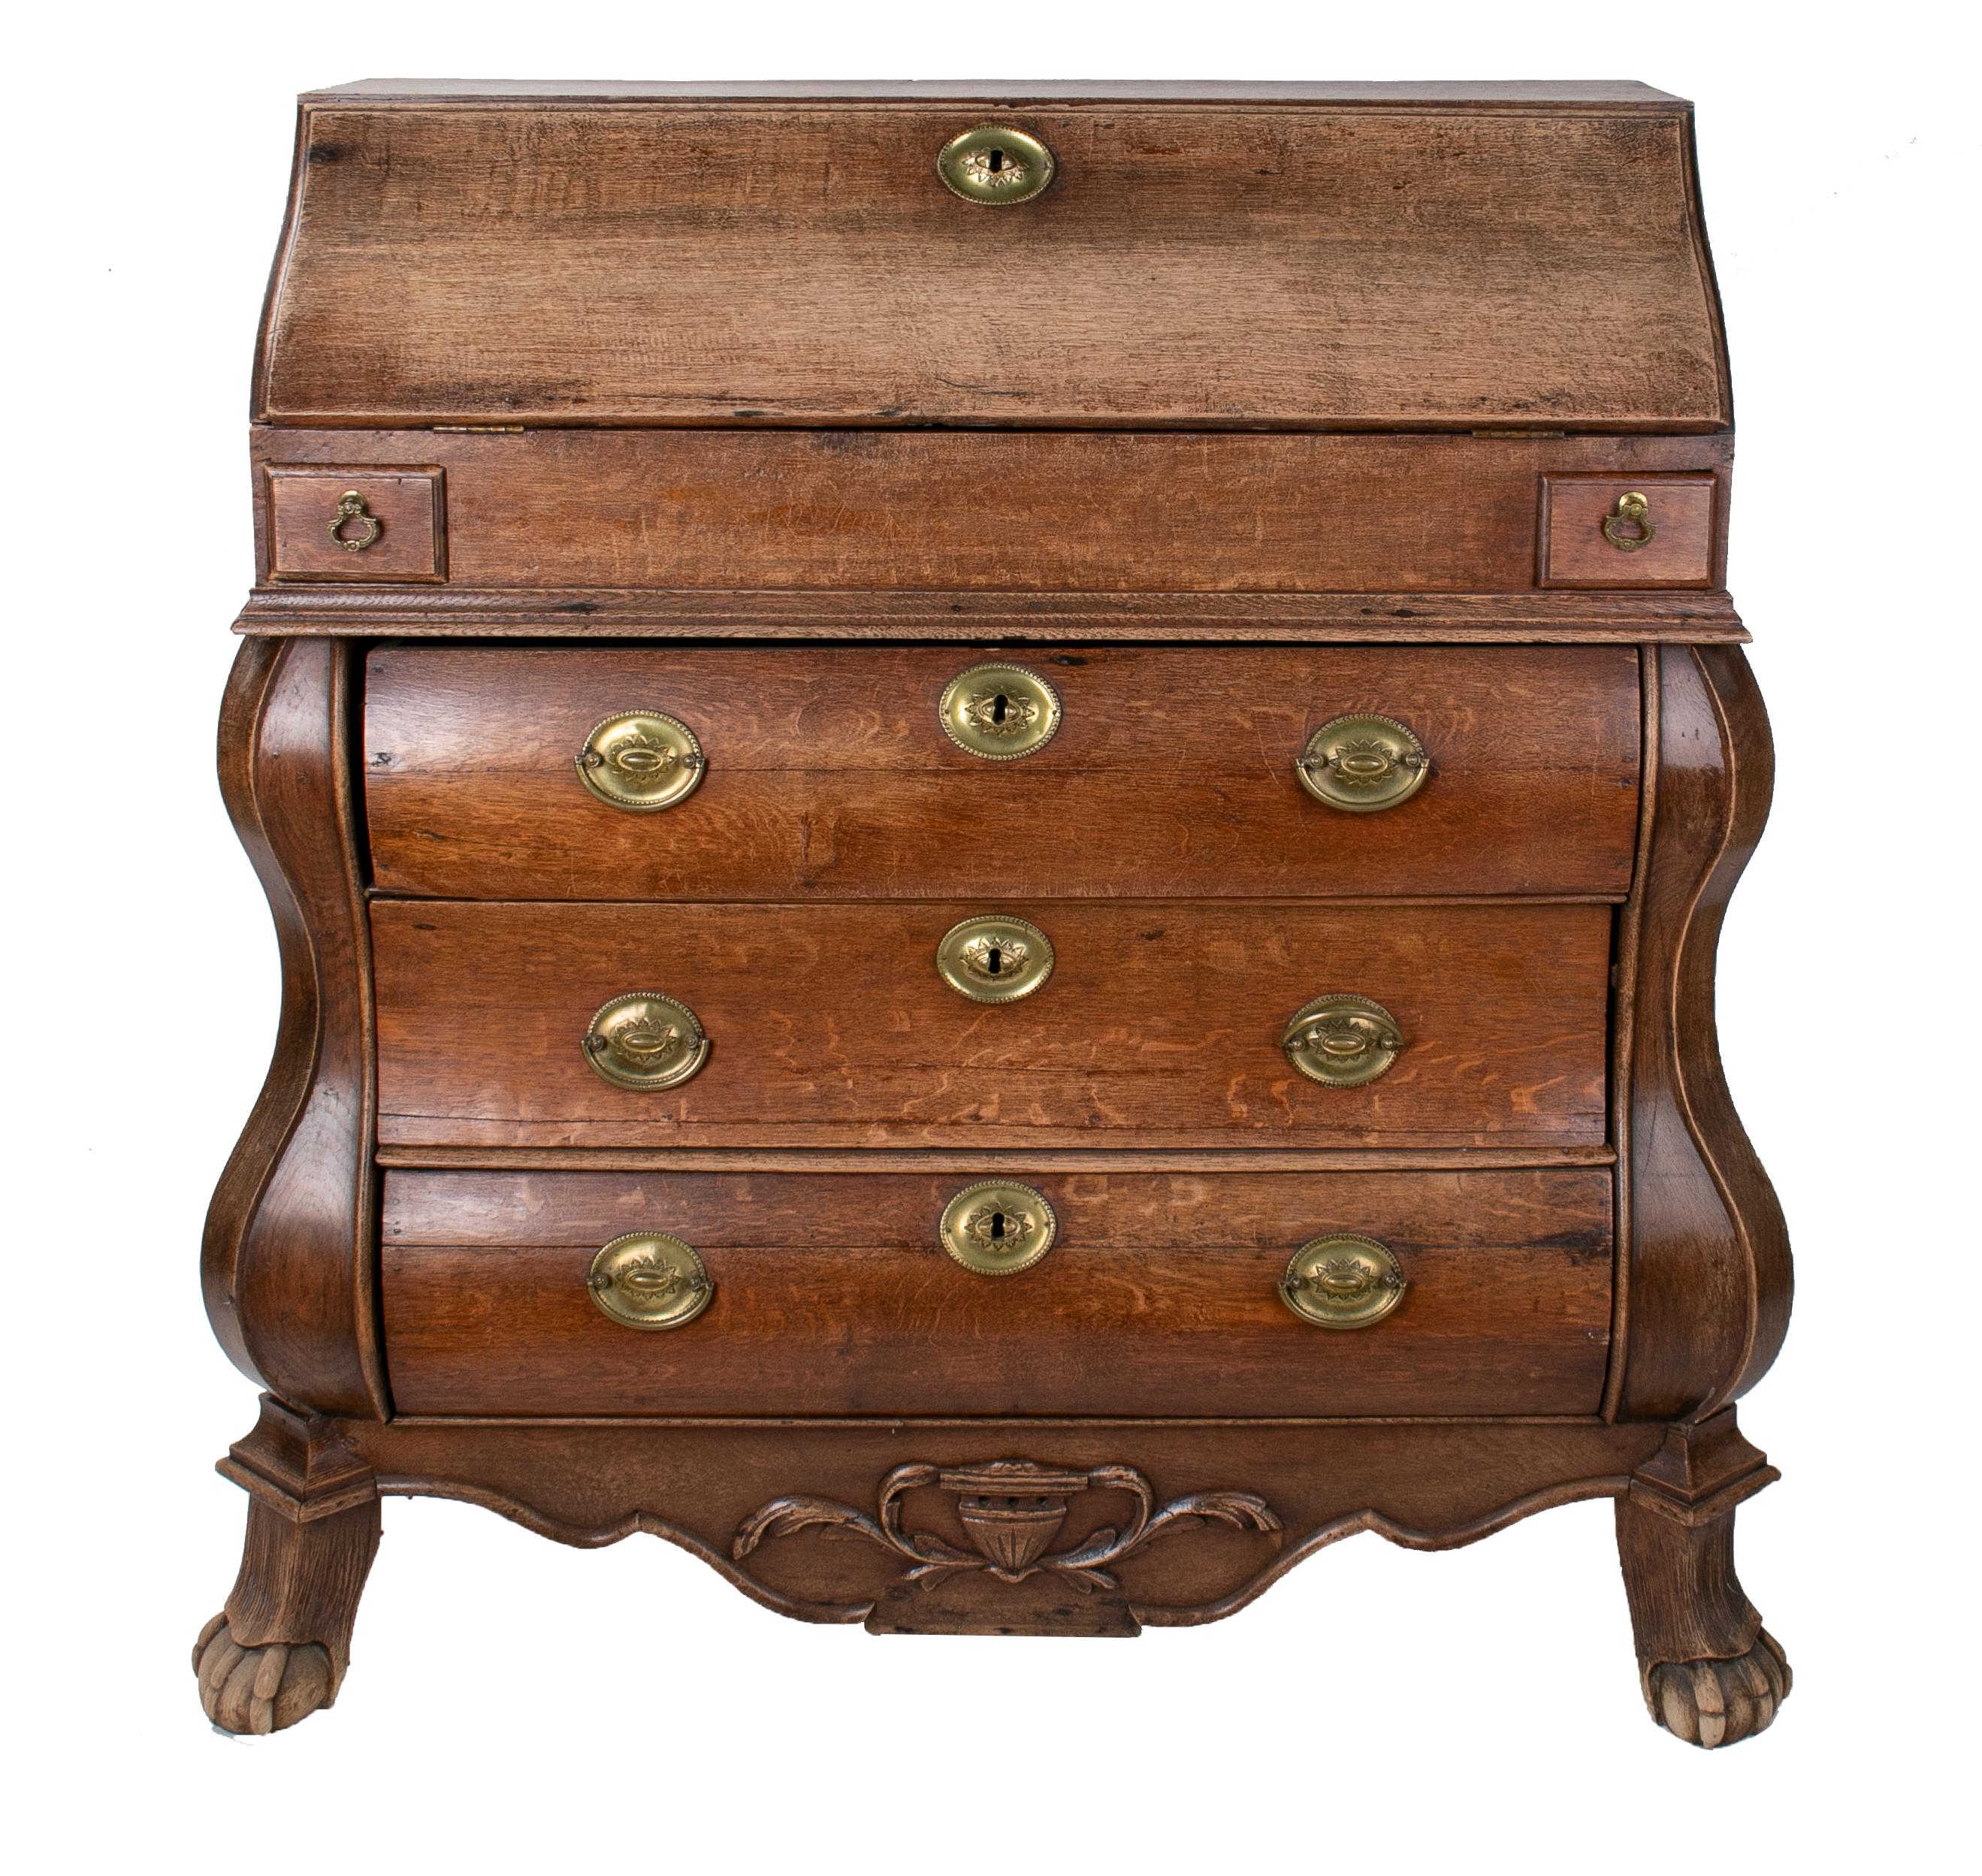 19th century English 3-drawer oak bureau office desk with bronze hardware.